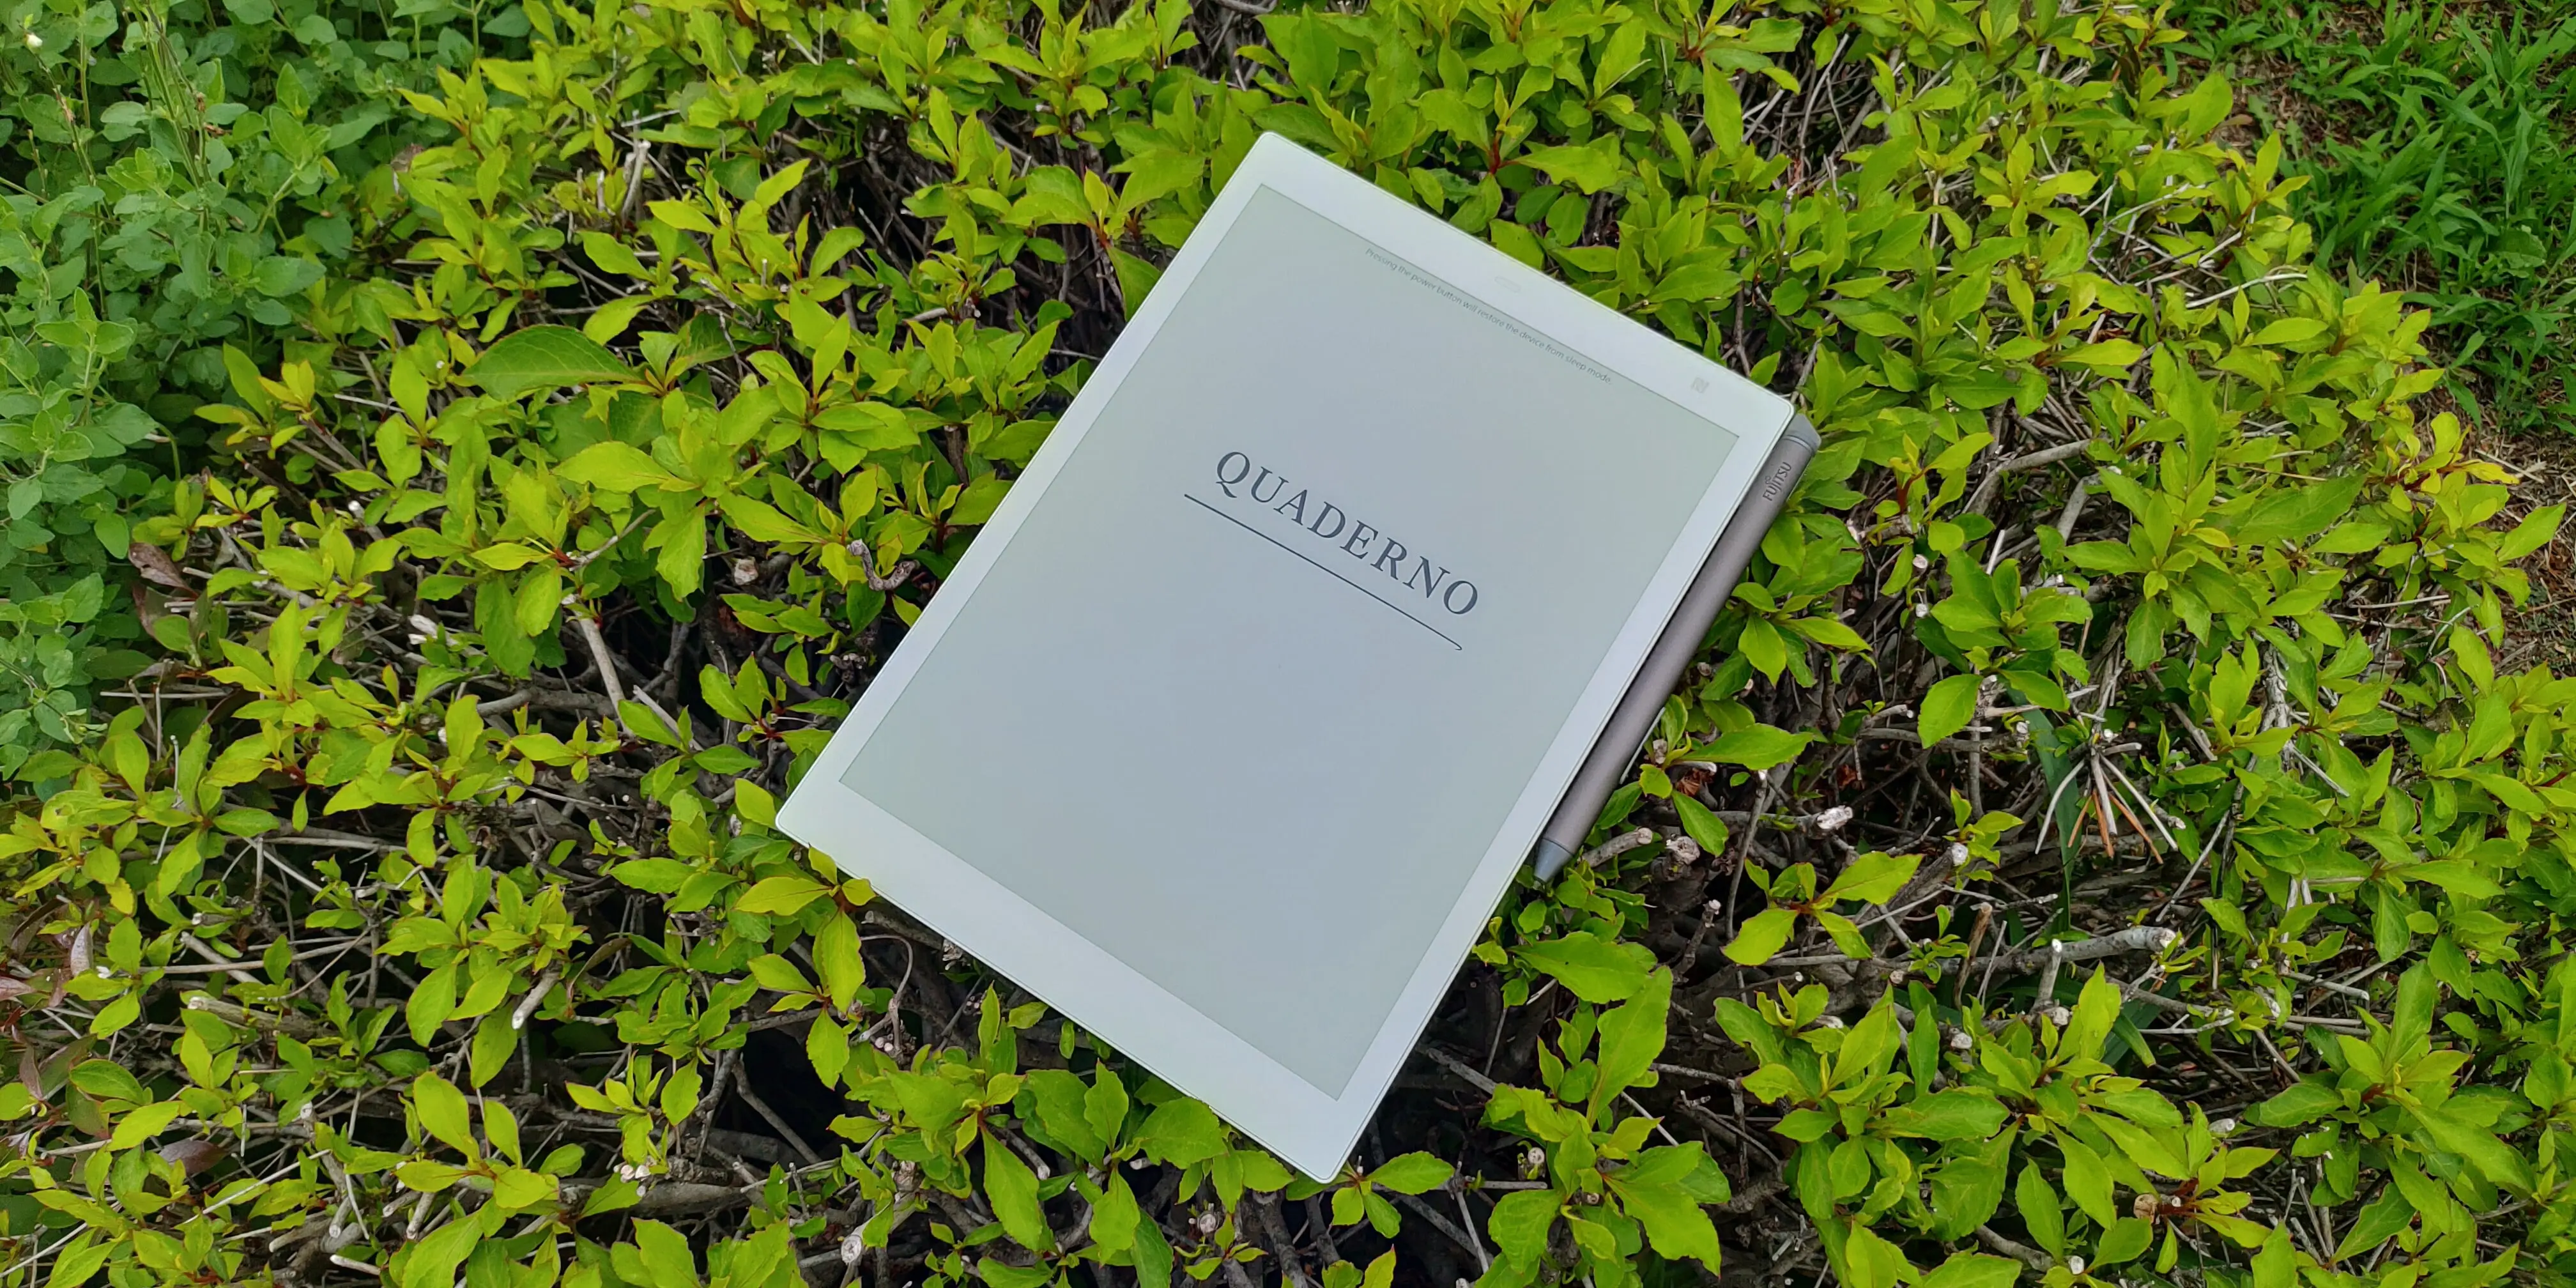 Hands on Review of the Fujitsu Quaderno A5 - Good e-Reader